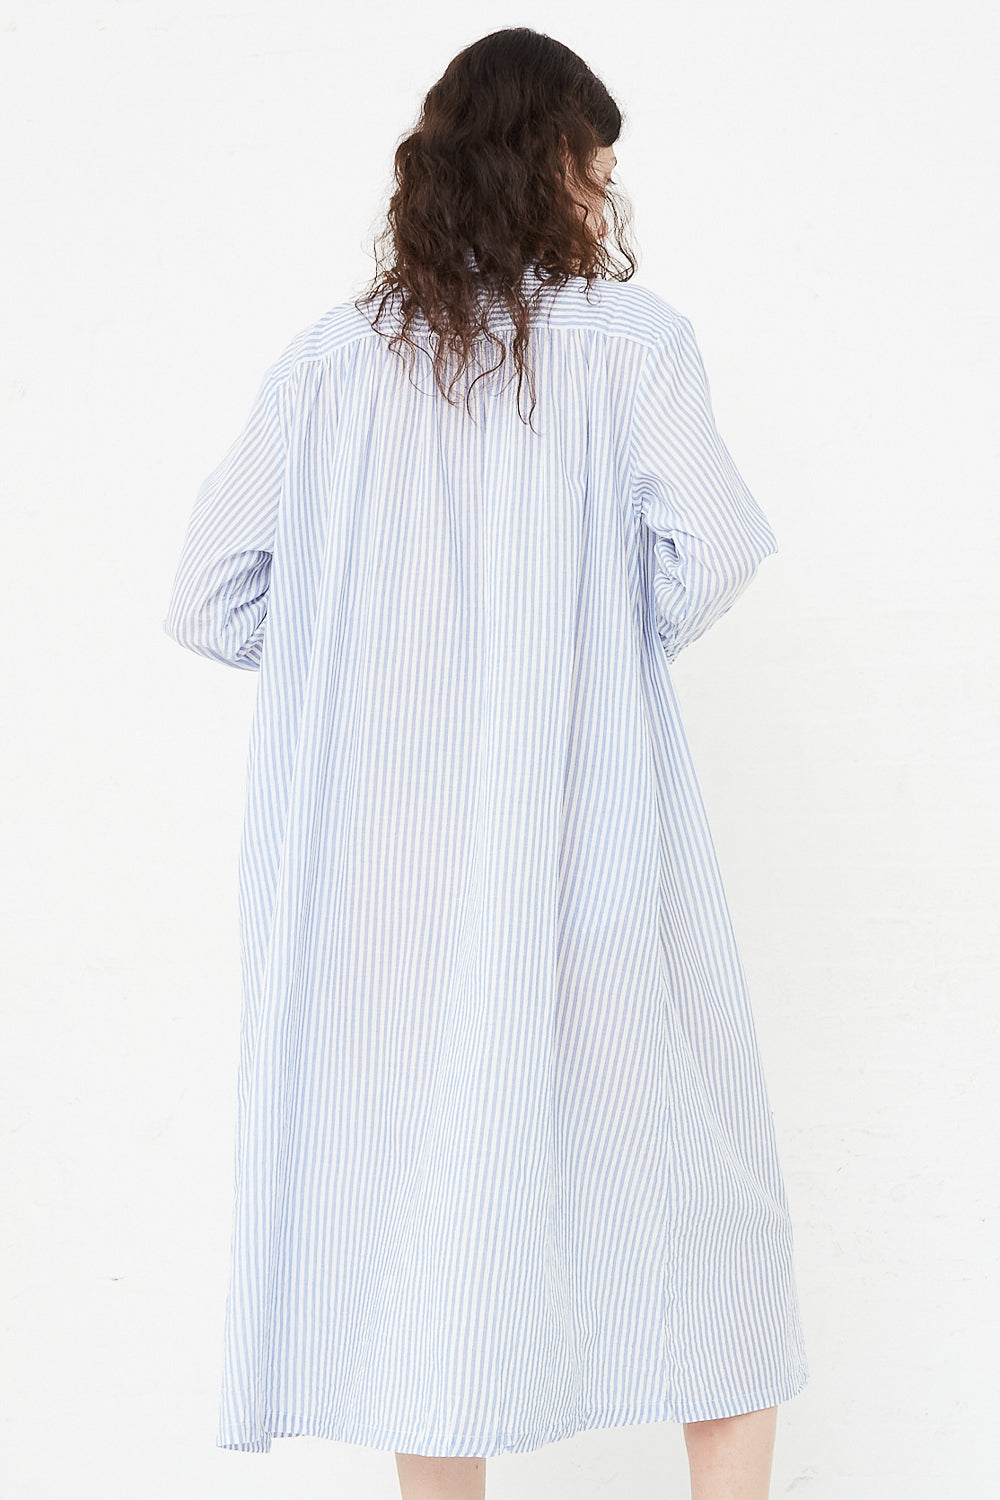 Cotton Stripe Dress in Light Blue back view